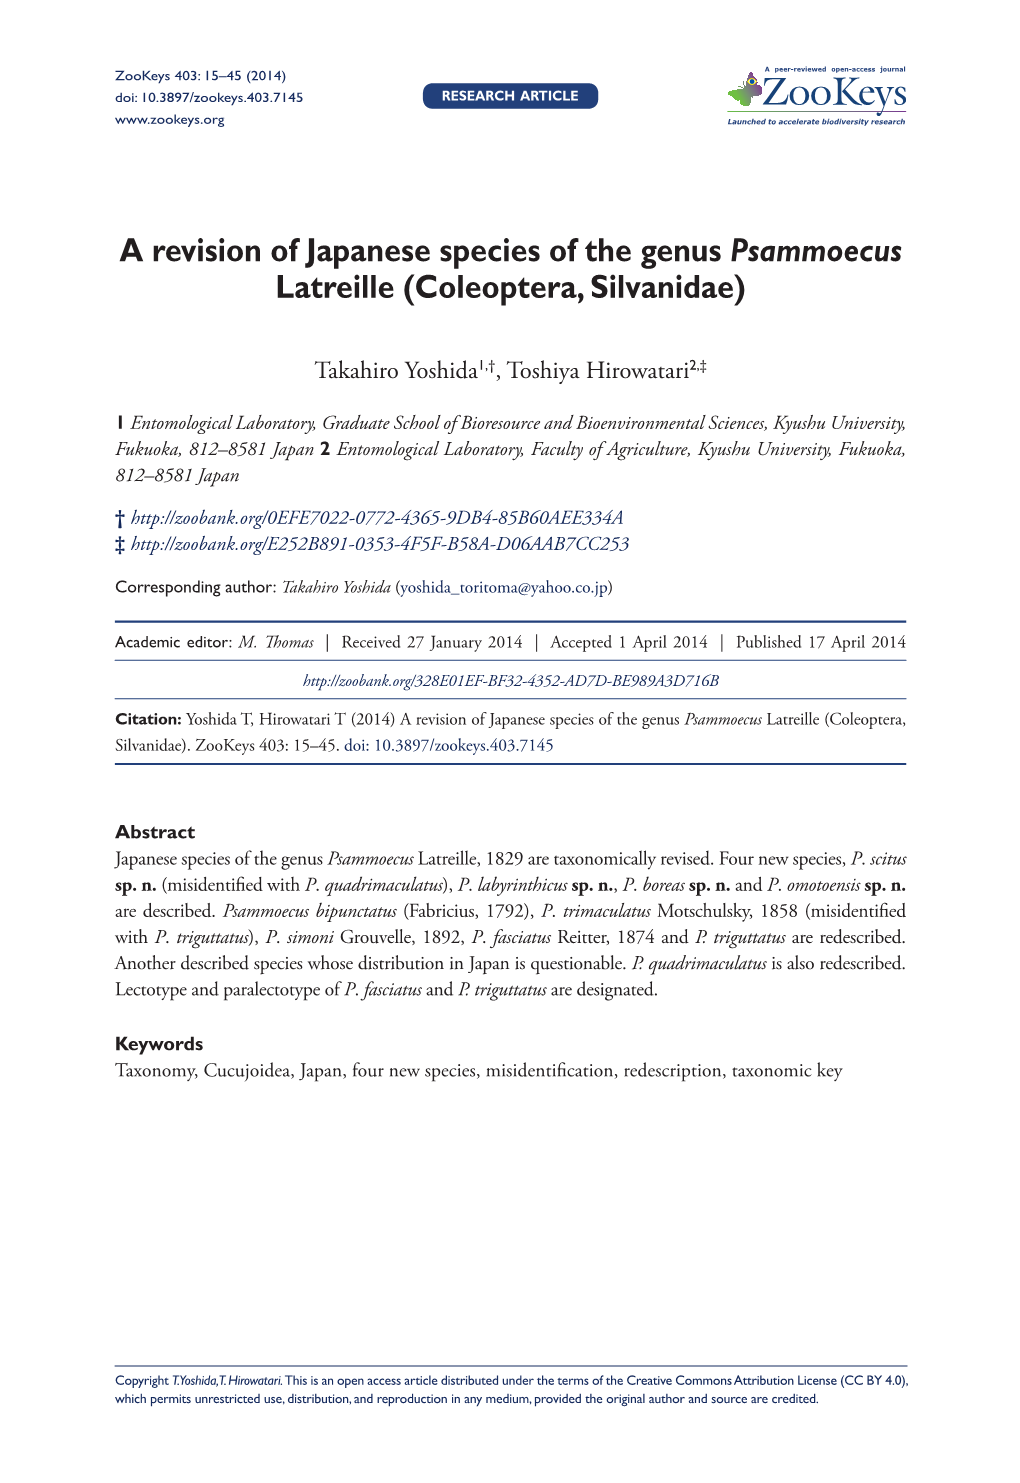 A Revision of Japanese Species of the Genus Psammoecus Latreille (Coleoptera, Silvanidae)